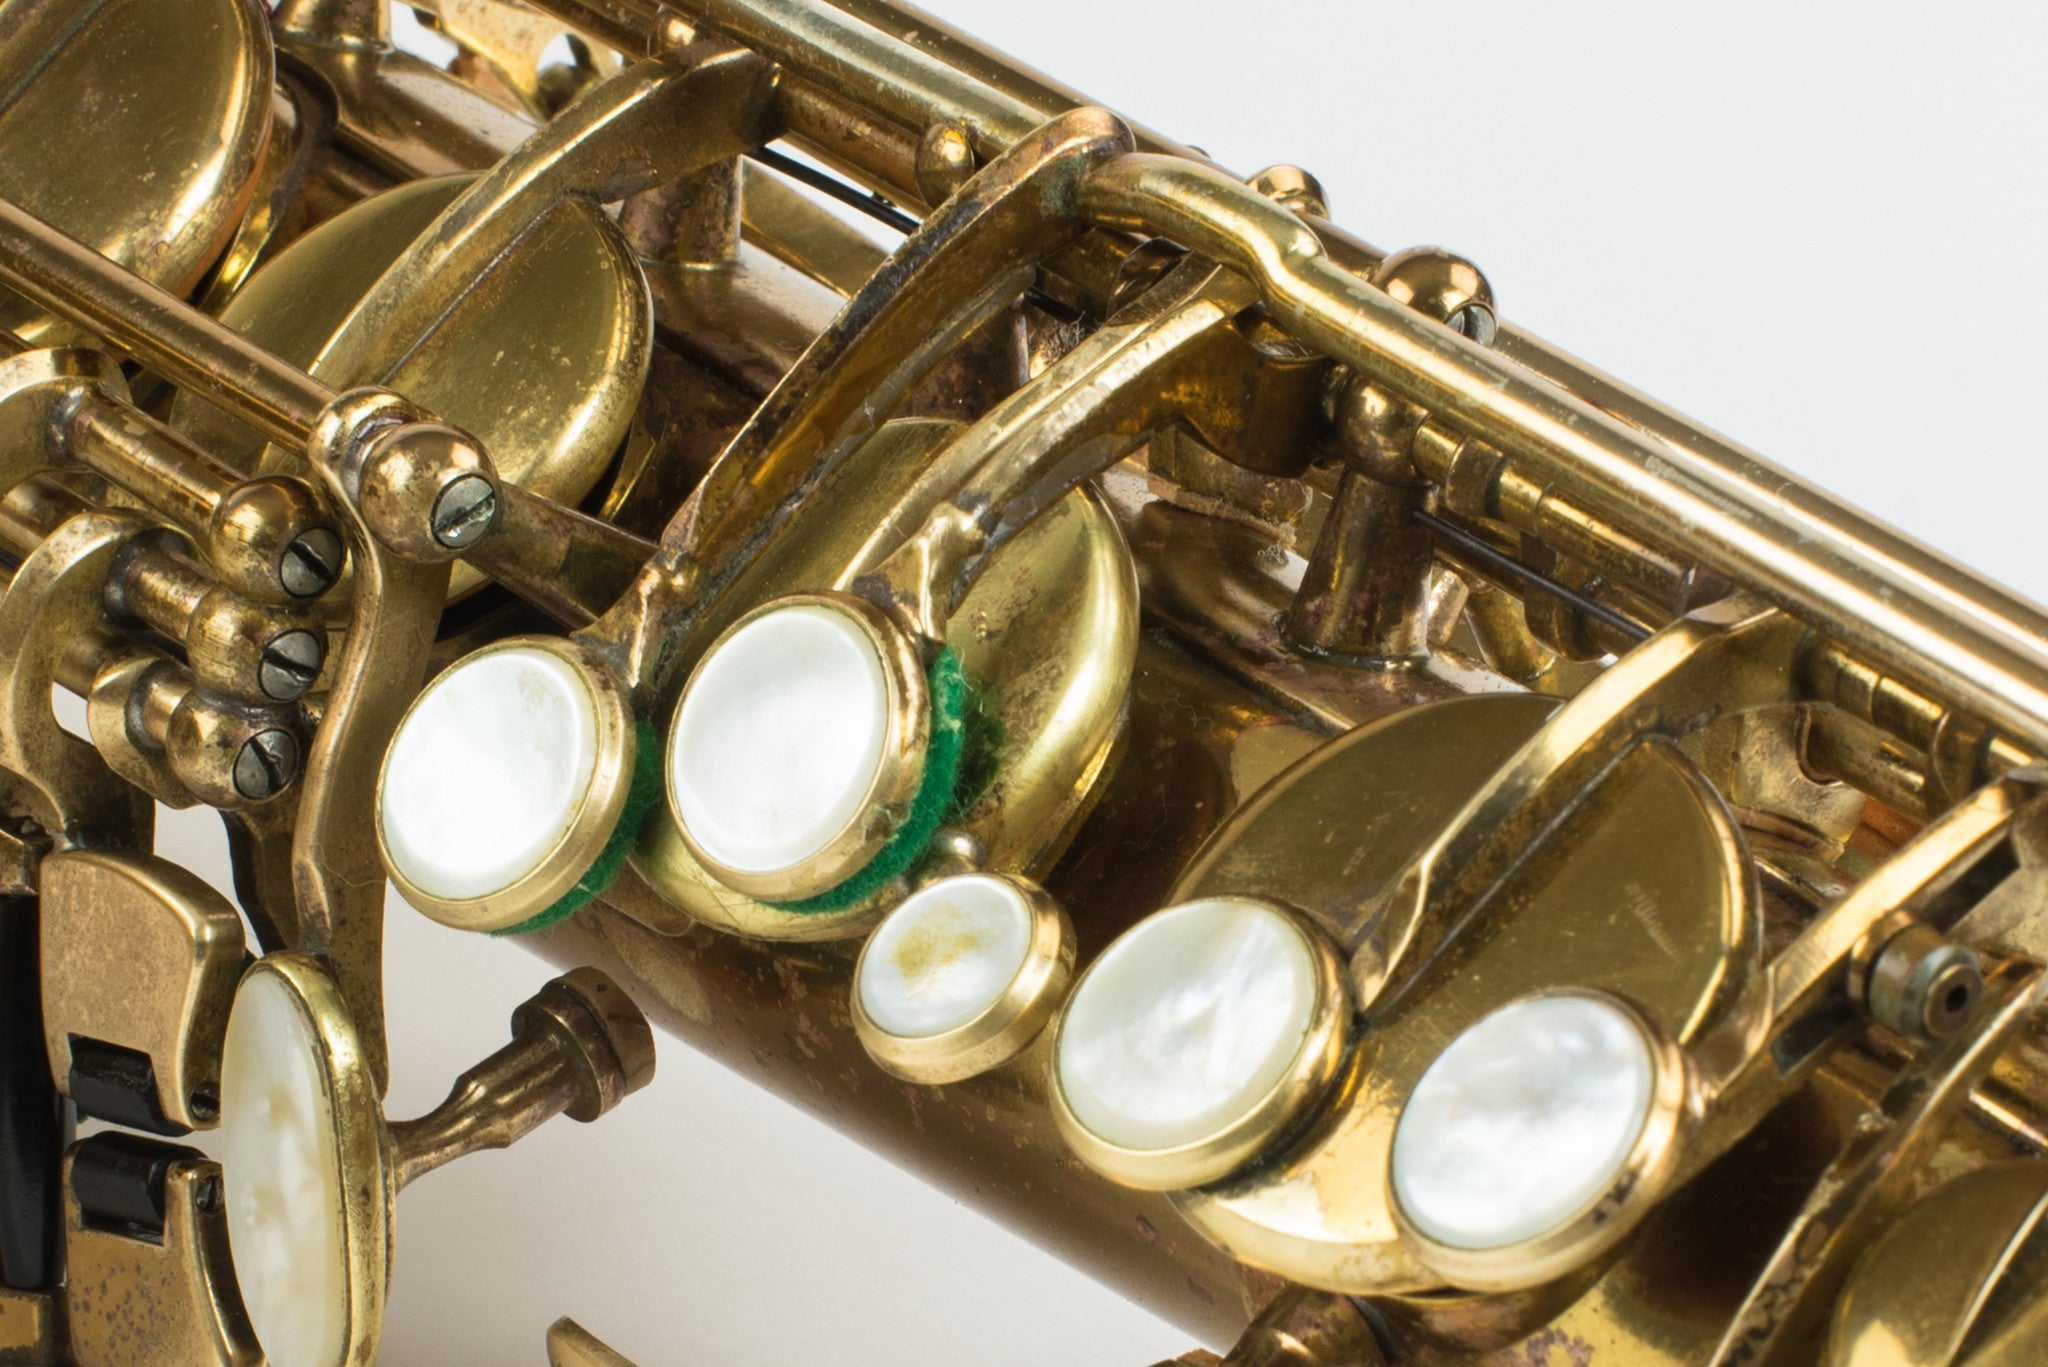 1962 Selmer Mark VI Tenor Saxophone 101,xxx, 97% ORIGINAL LACQUER, CHRIS POTTER S/N